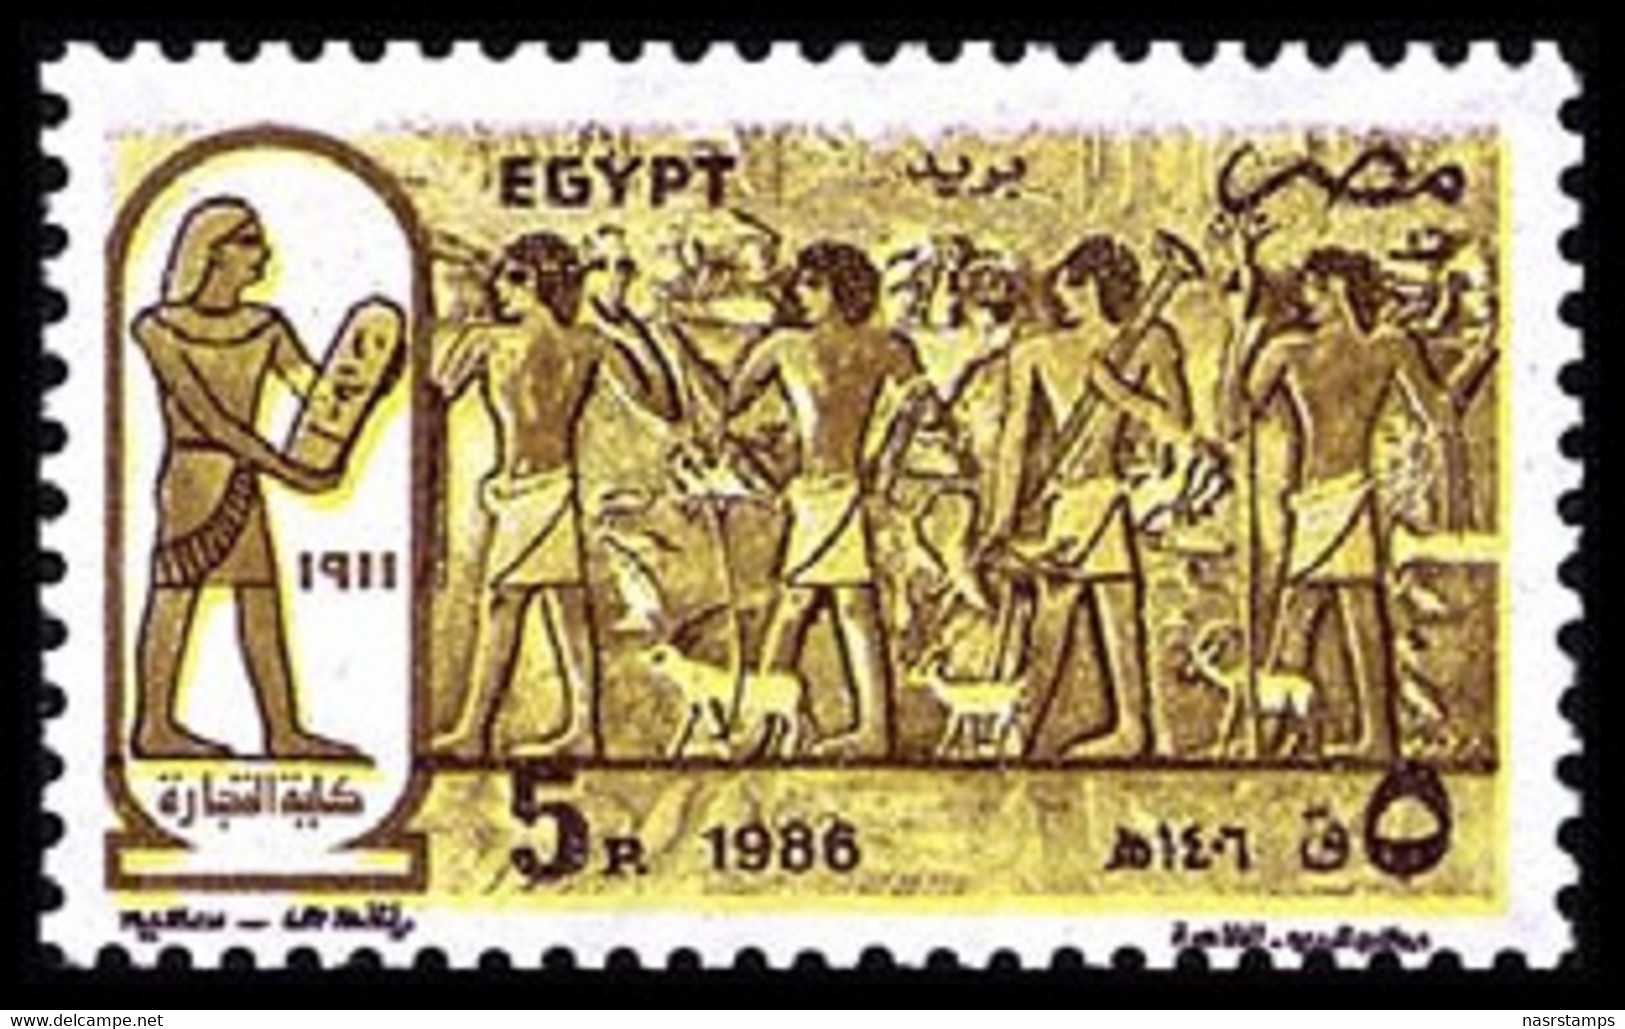 Egypt - 1986 - Egyptology - ( Faculty Of Commerce, Cairo Univ., 75th Anniv. - Btah Hotteb's Tomb At Saqqara ) - Nuevos